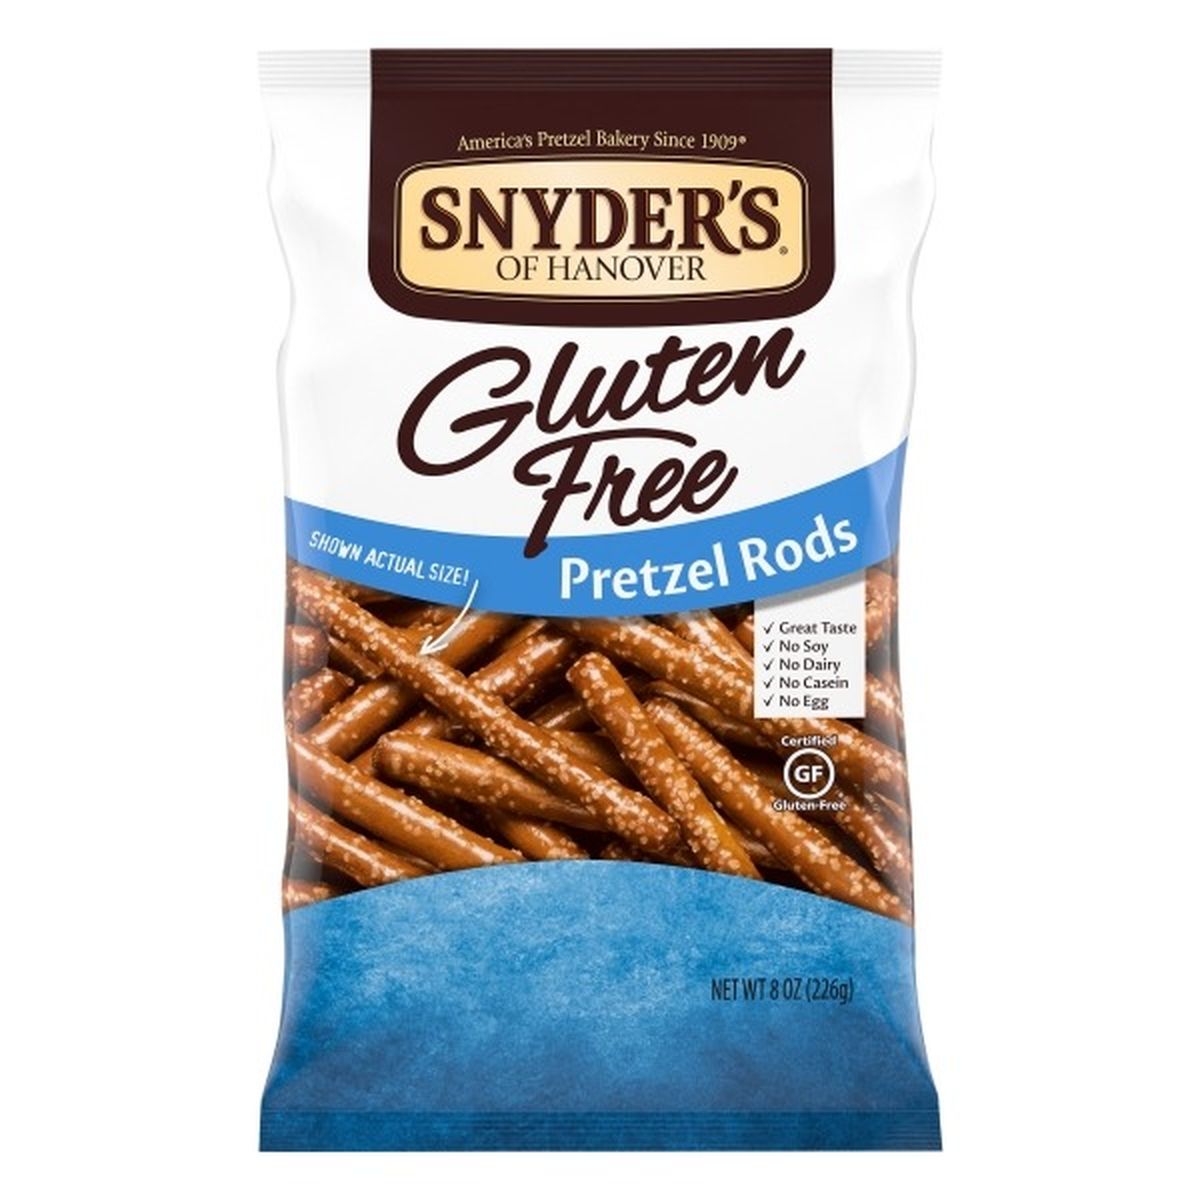 Calories in Snyder's of Hanovers Pretzel Rods, Gluten Free